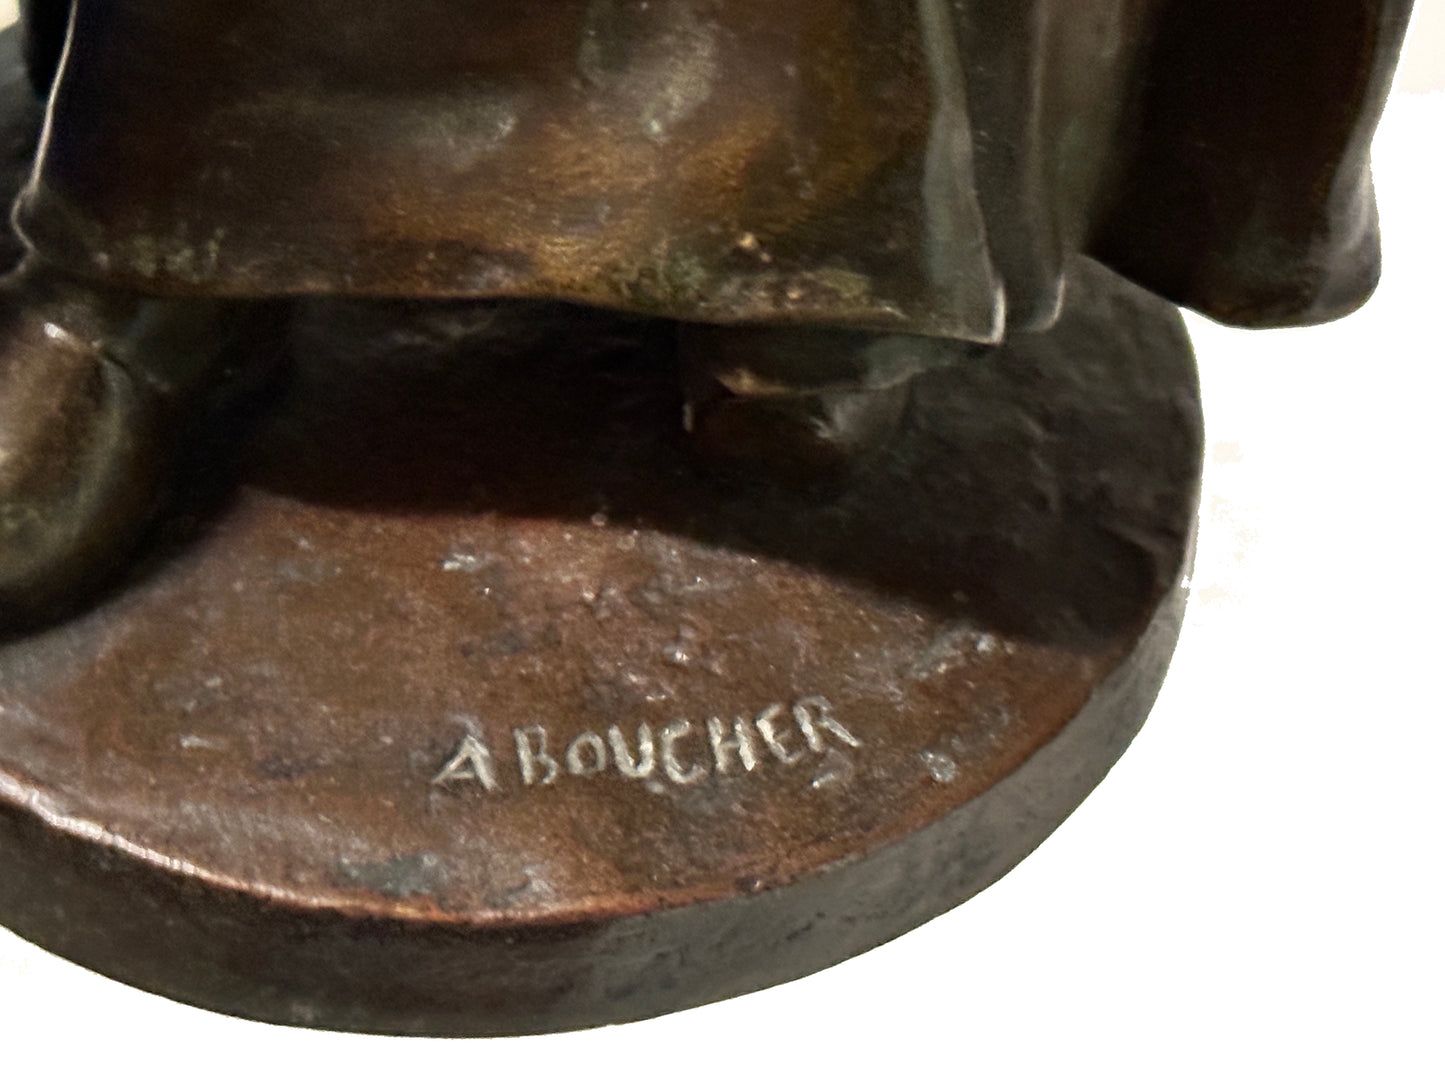 Alfred Boucher Signed Bronze Sculpture: "La Faneuse"